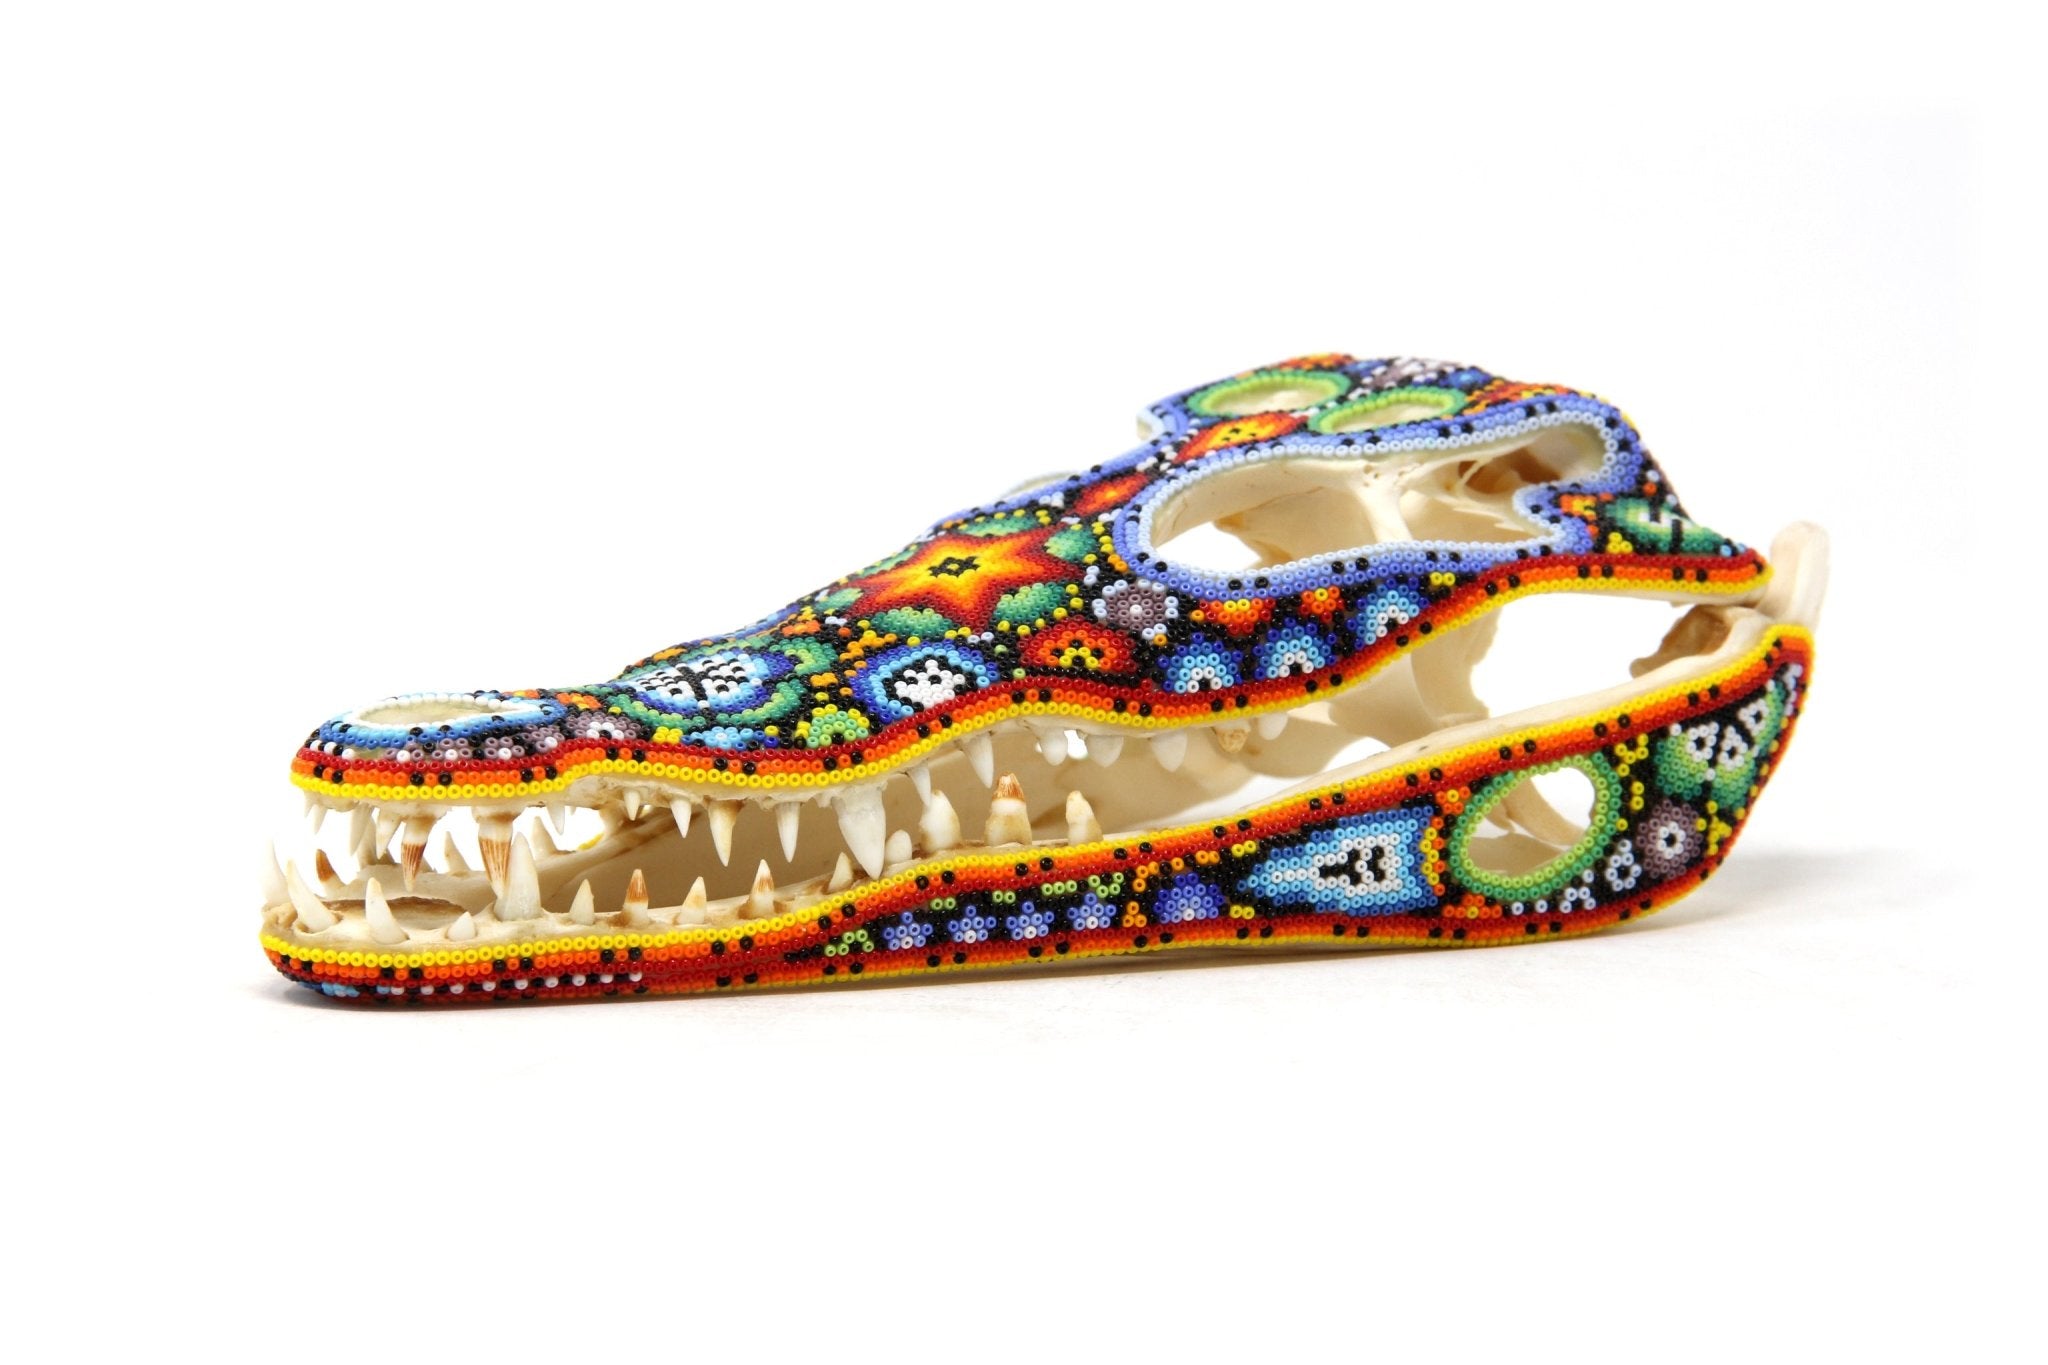 Krokodilschädel - Yutsi tutuya I - Huichol Art - Marakame